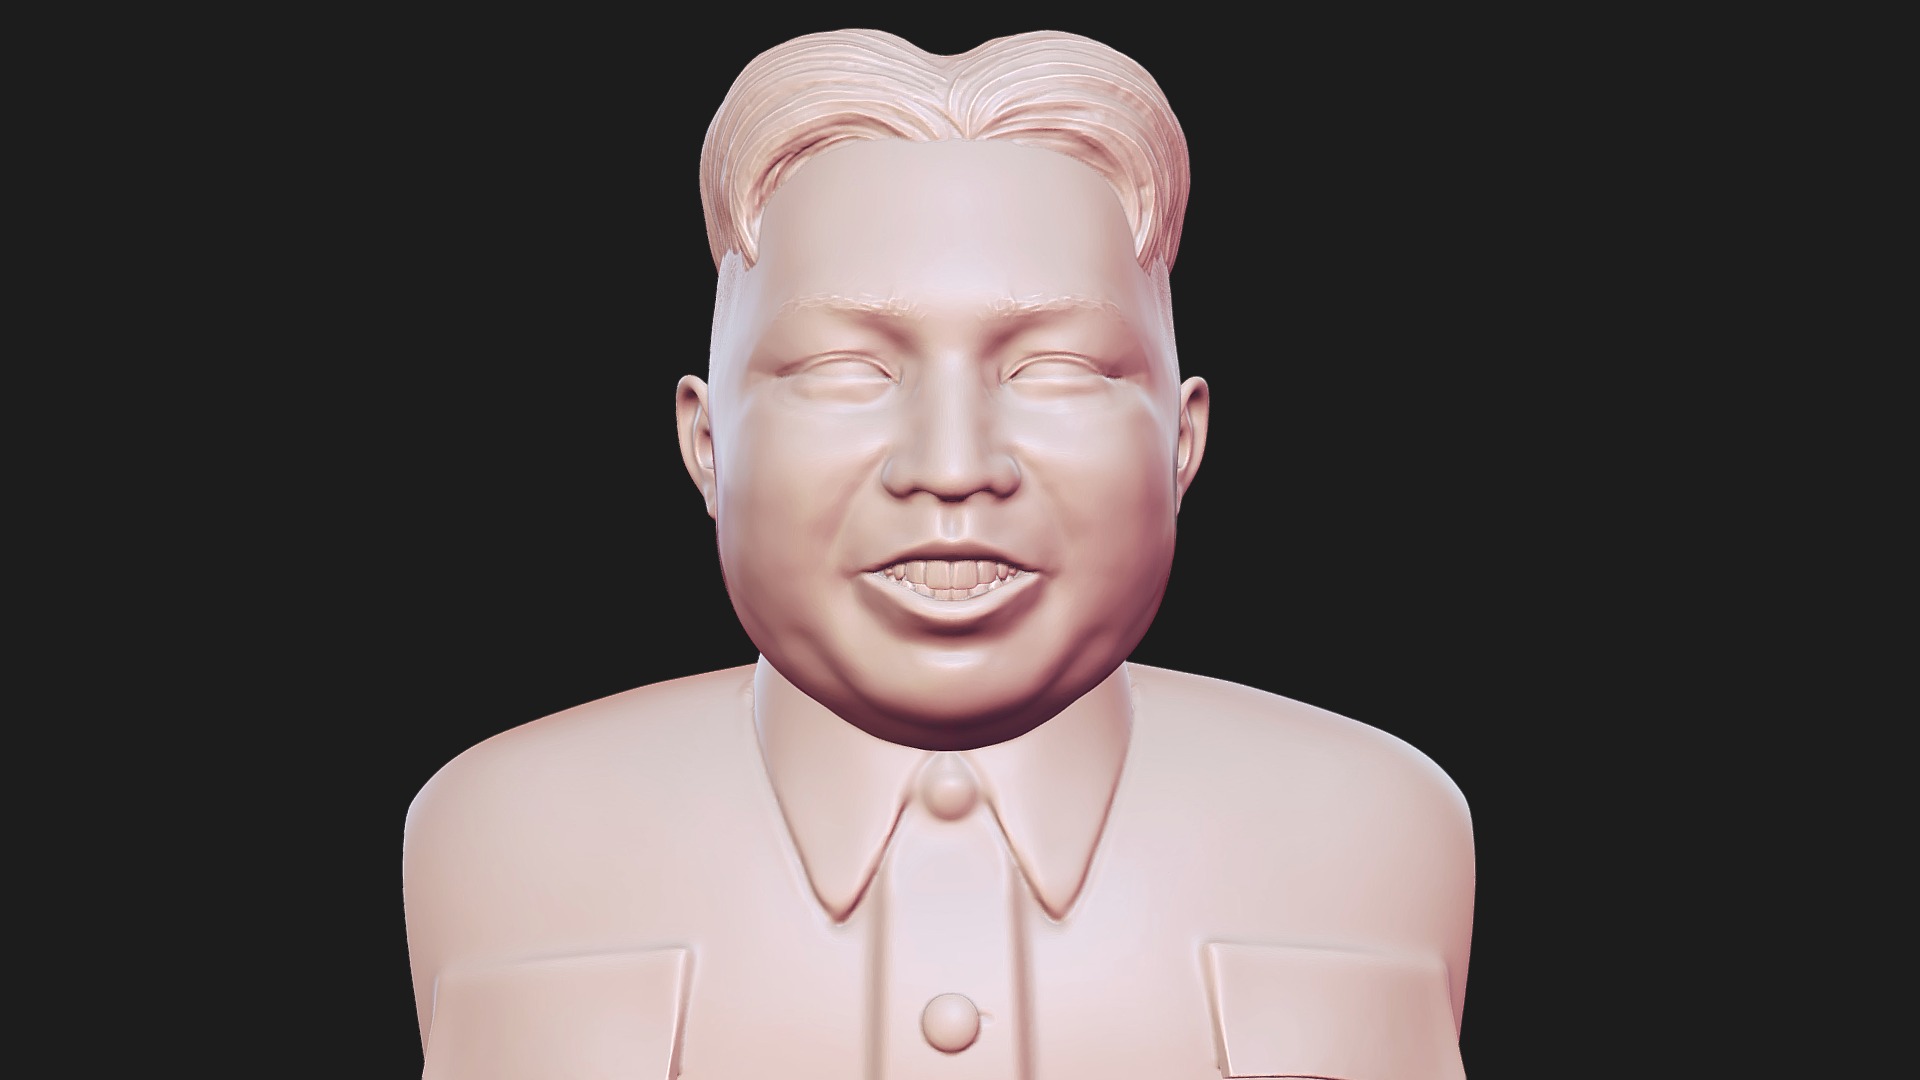 3D model Kimmy dear person 3D printable portrait - This is a 3D model of the Kimmy dear person 3D printable portrait. The 3D model is about a person with a distorted face.